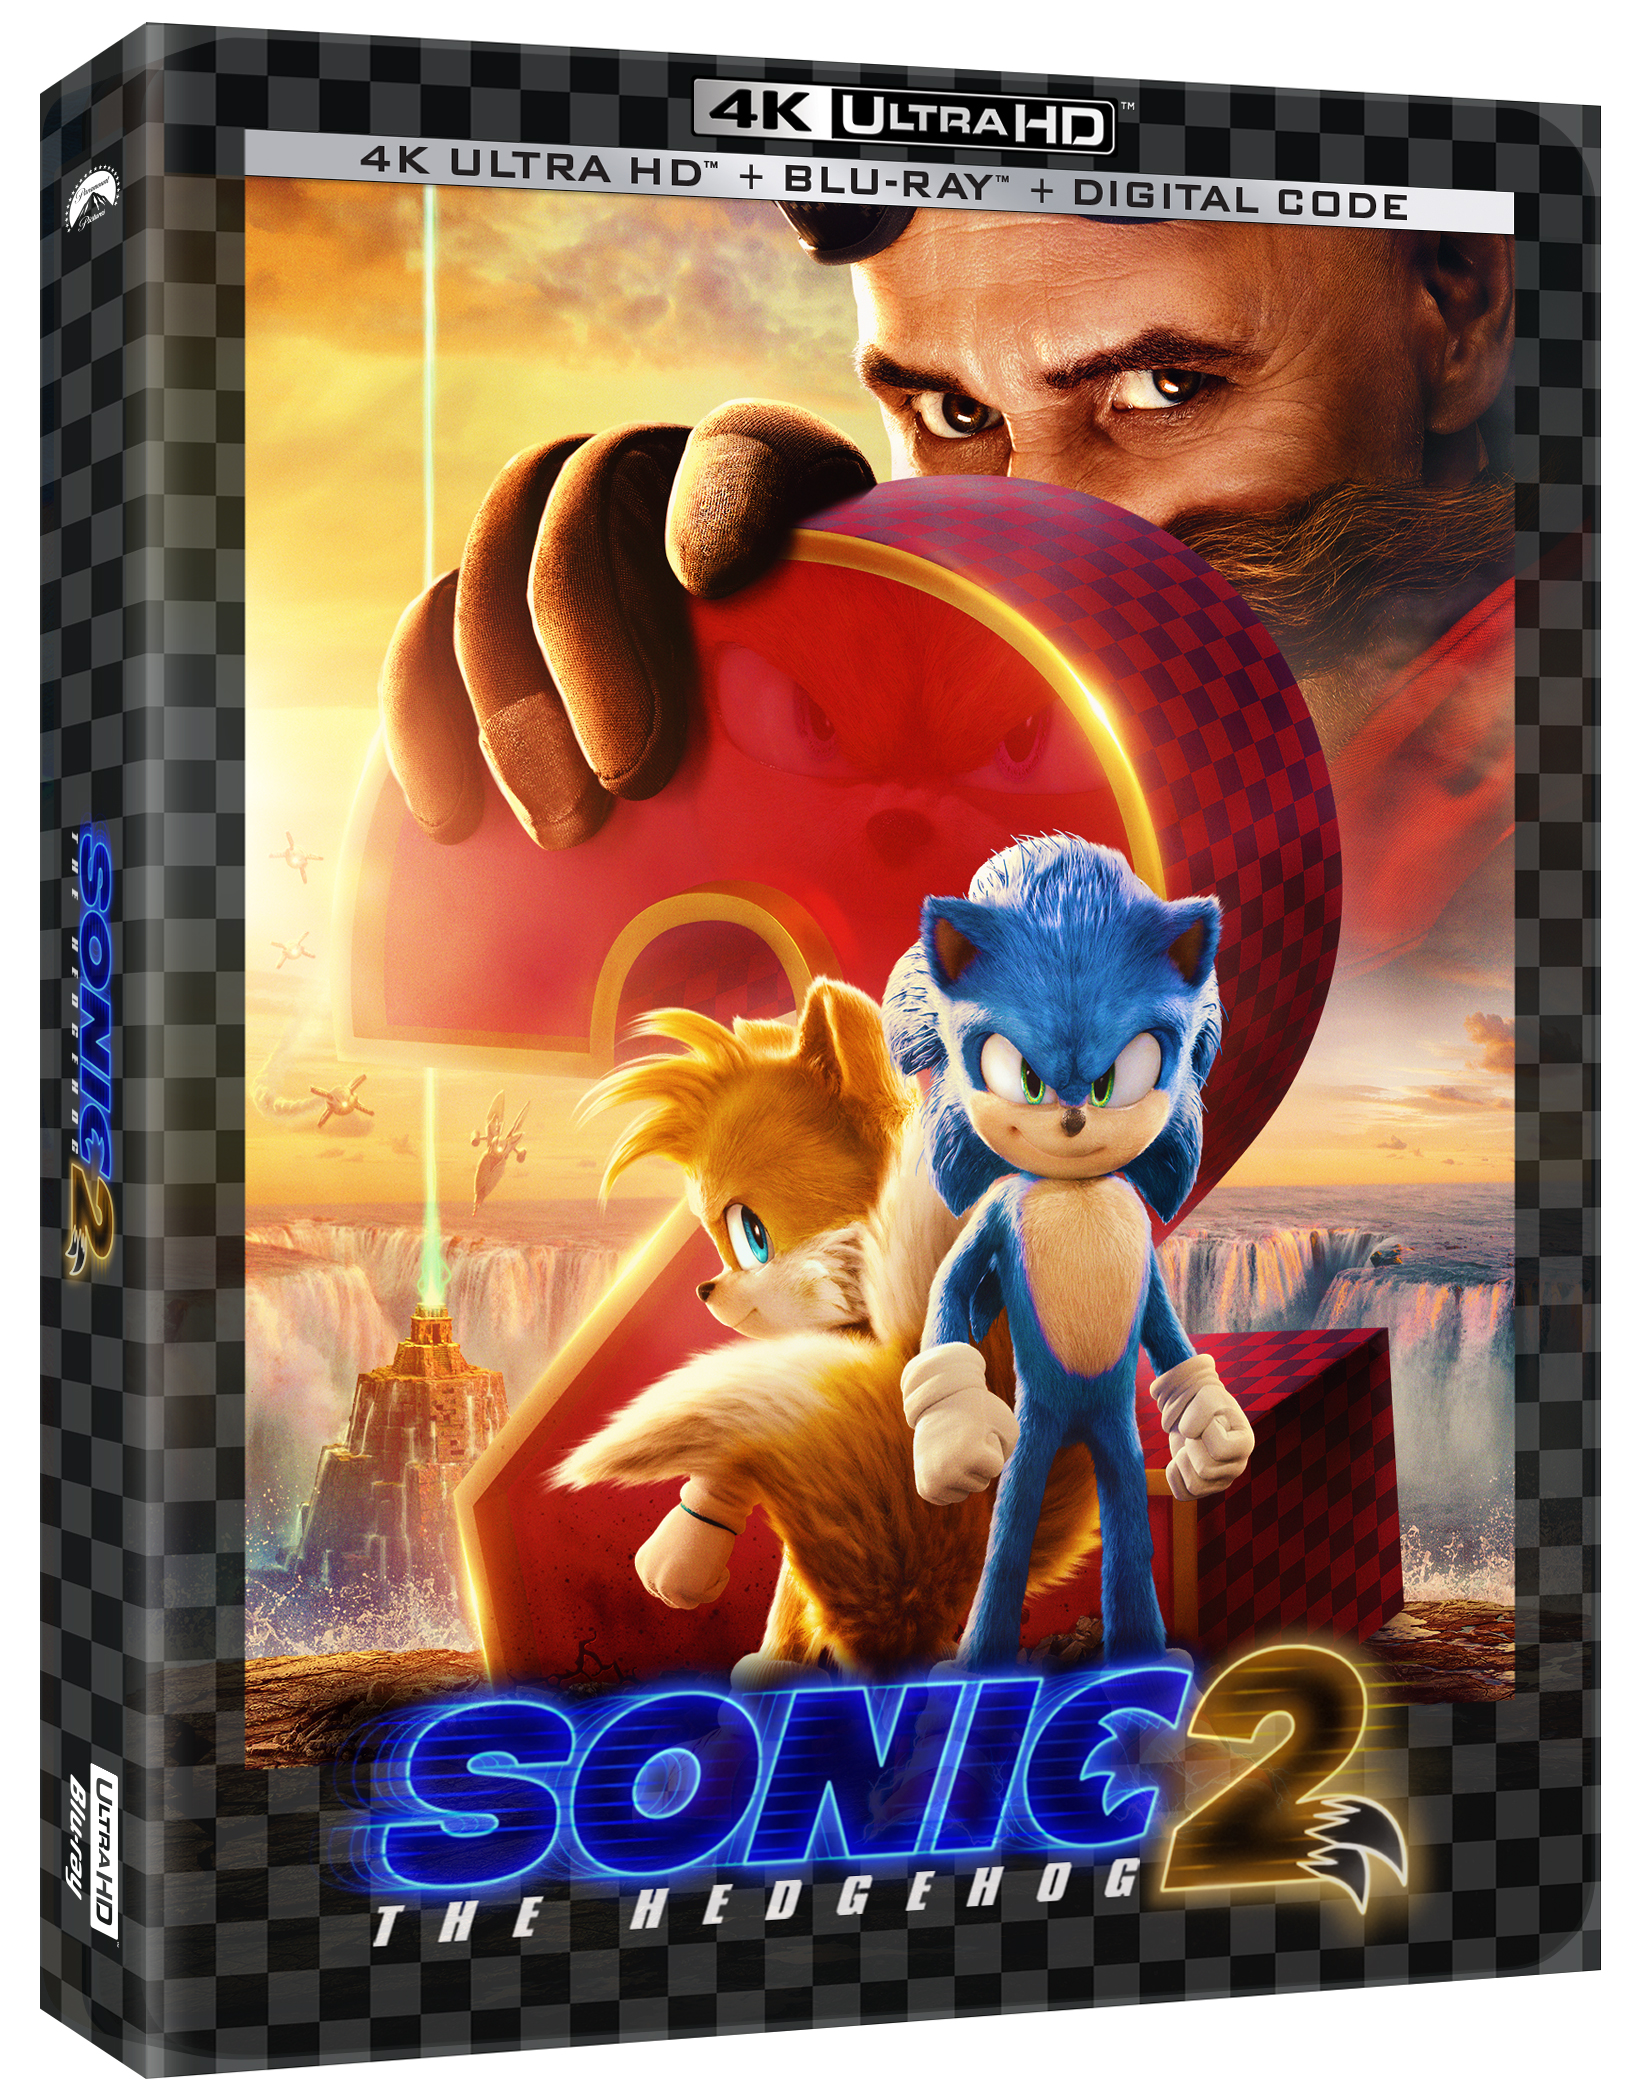 Update Sonic The Hedgehog Merchandise Review